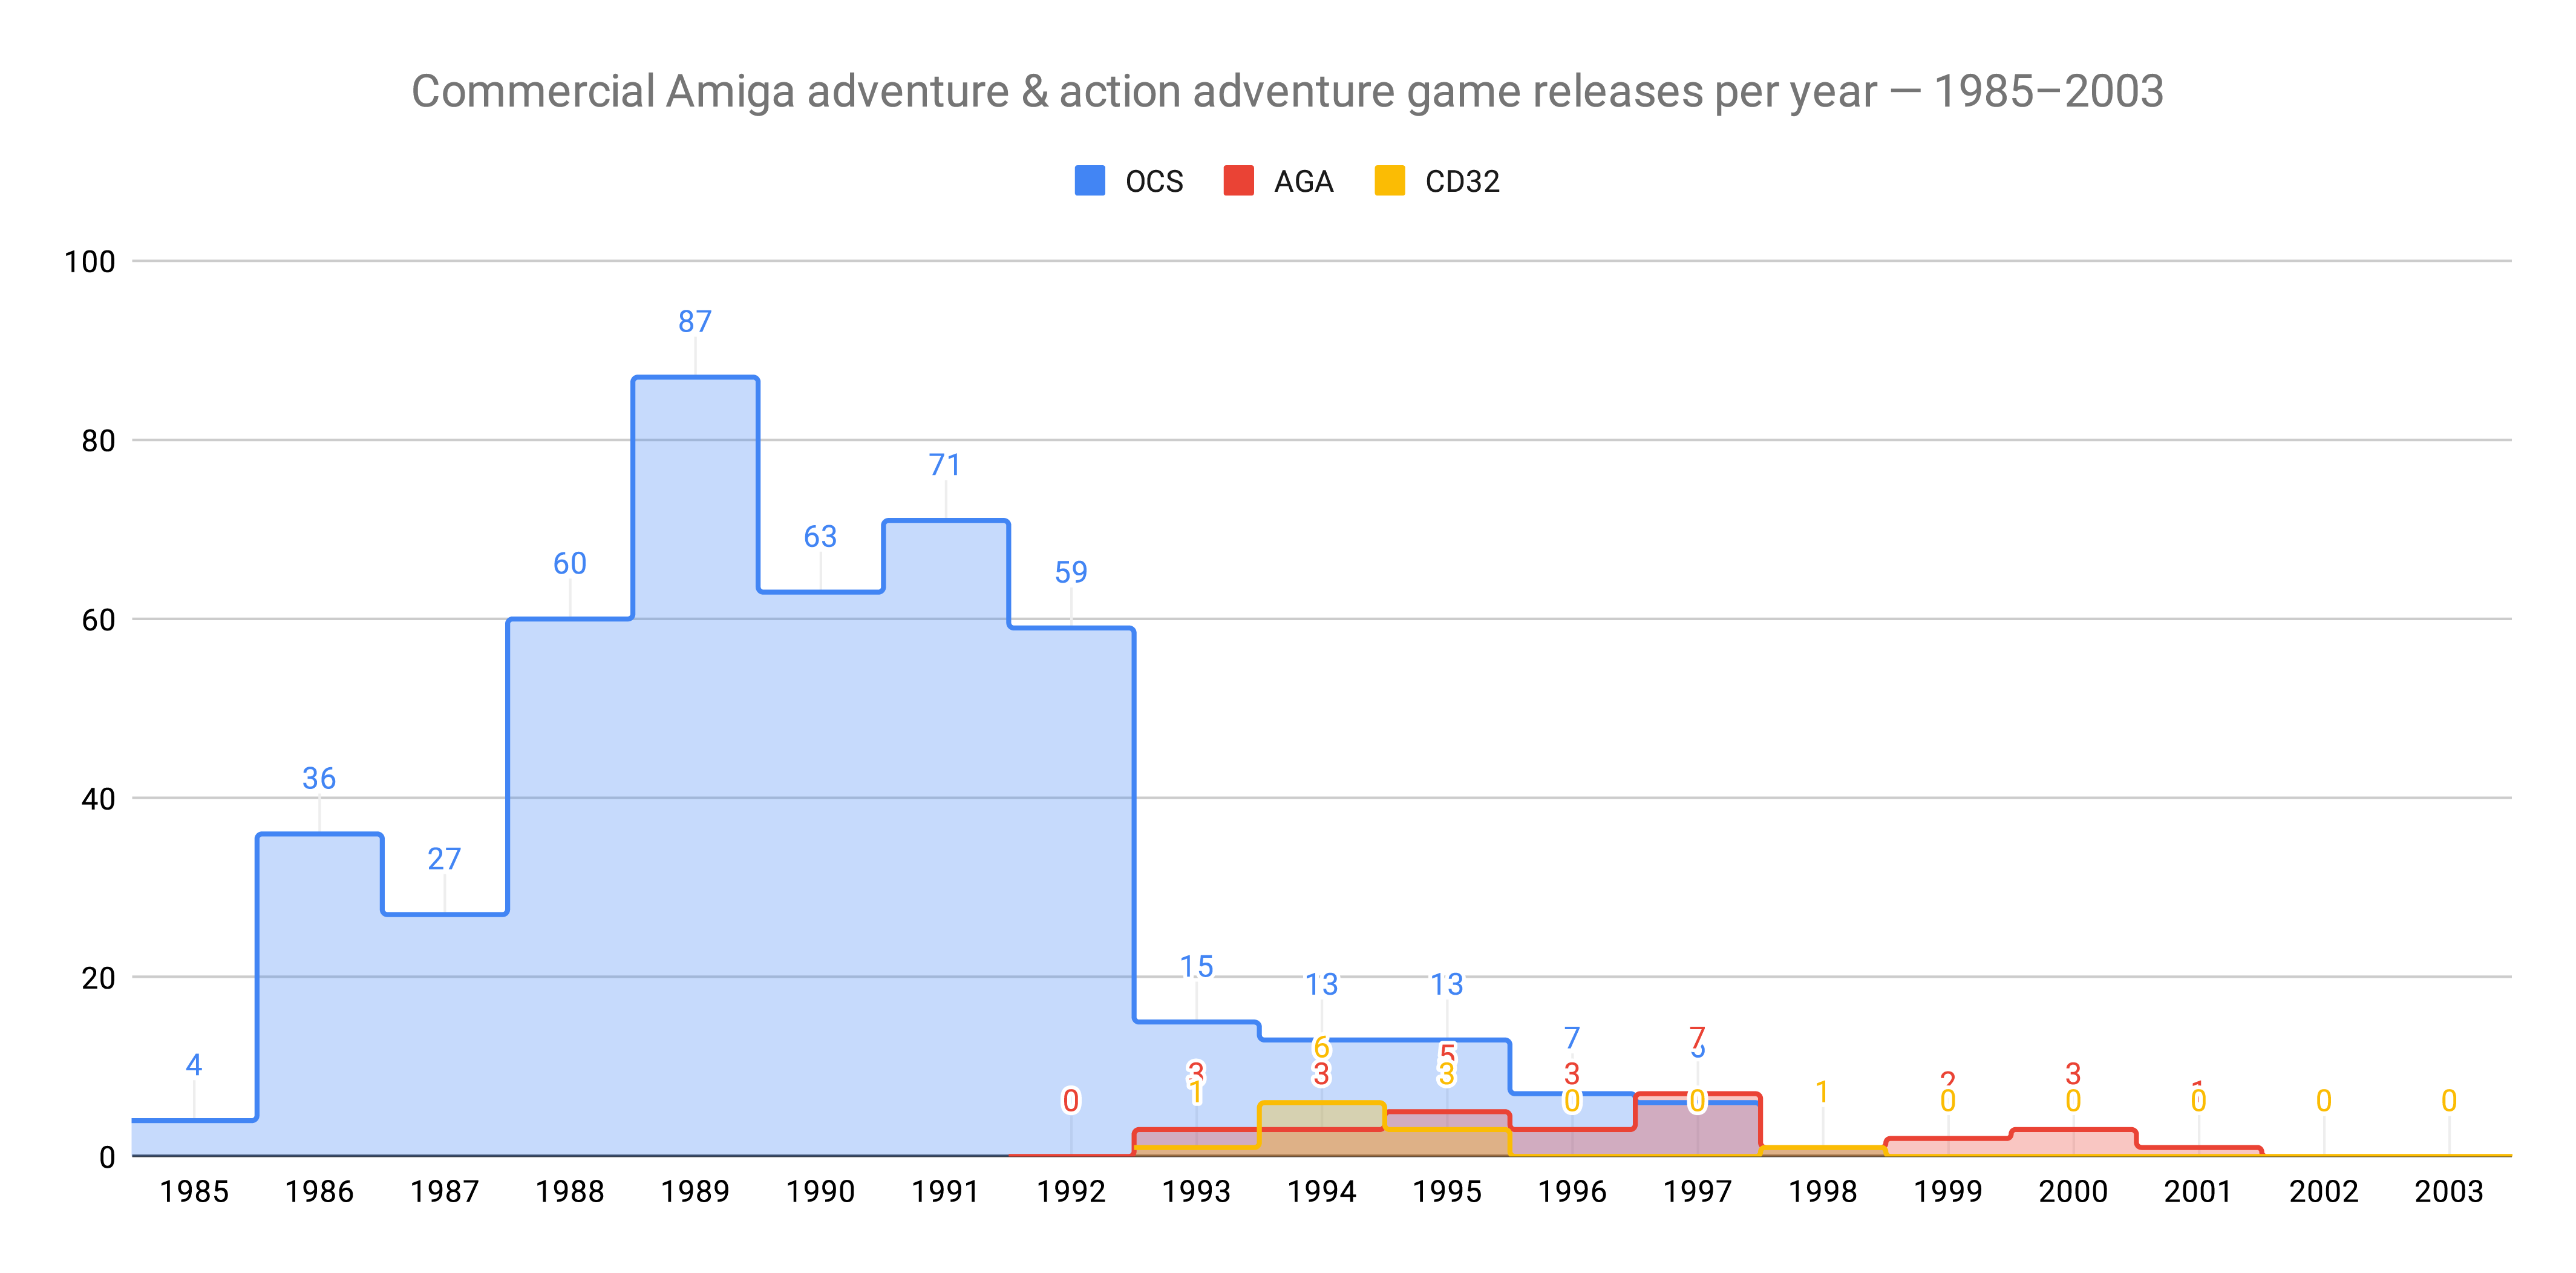 Commercial Amiga adventure & action adventure releases per year between 1985-2003